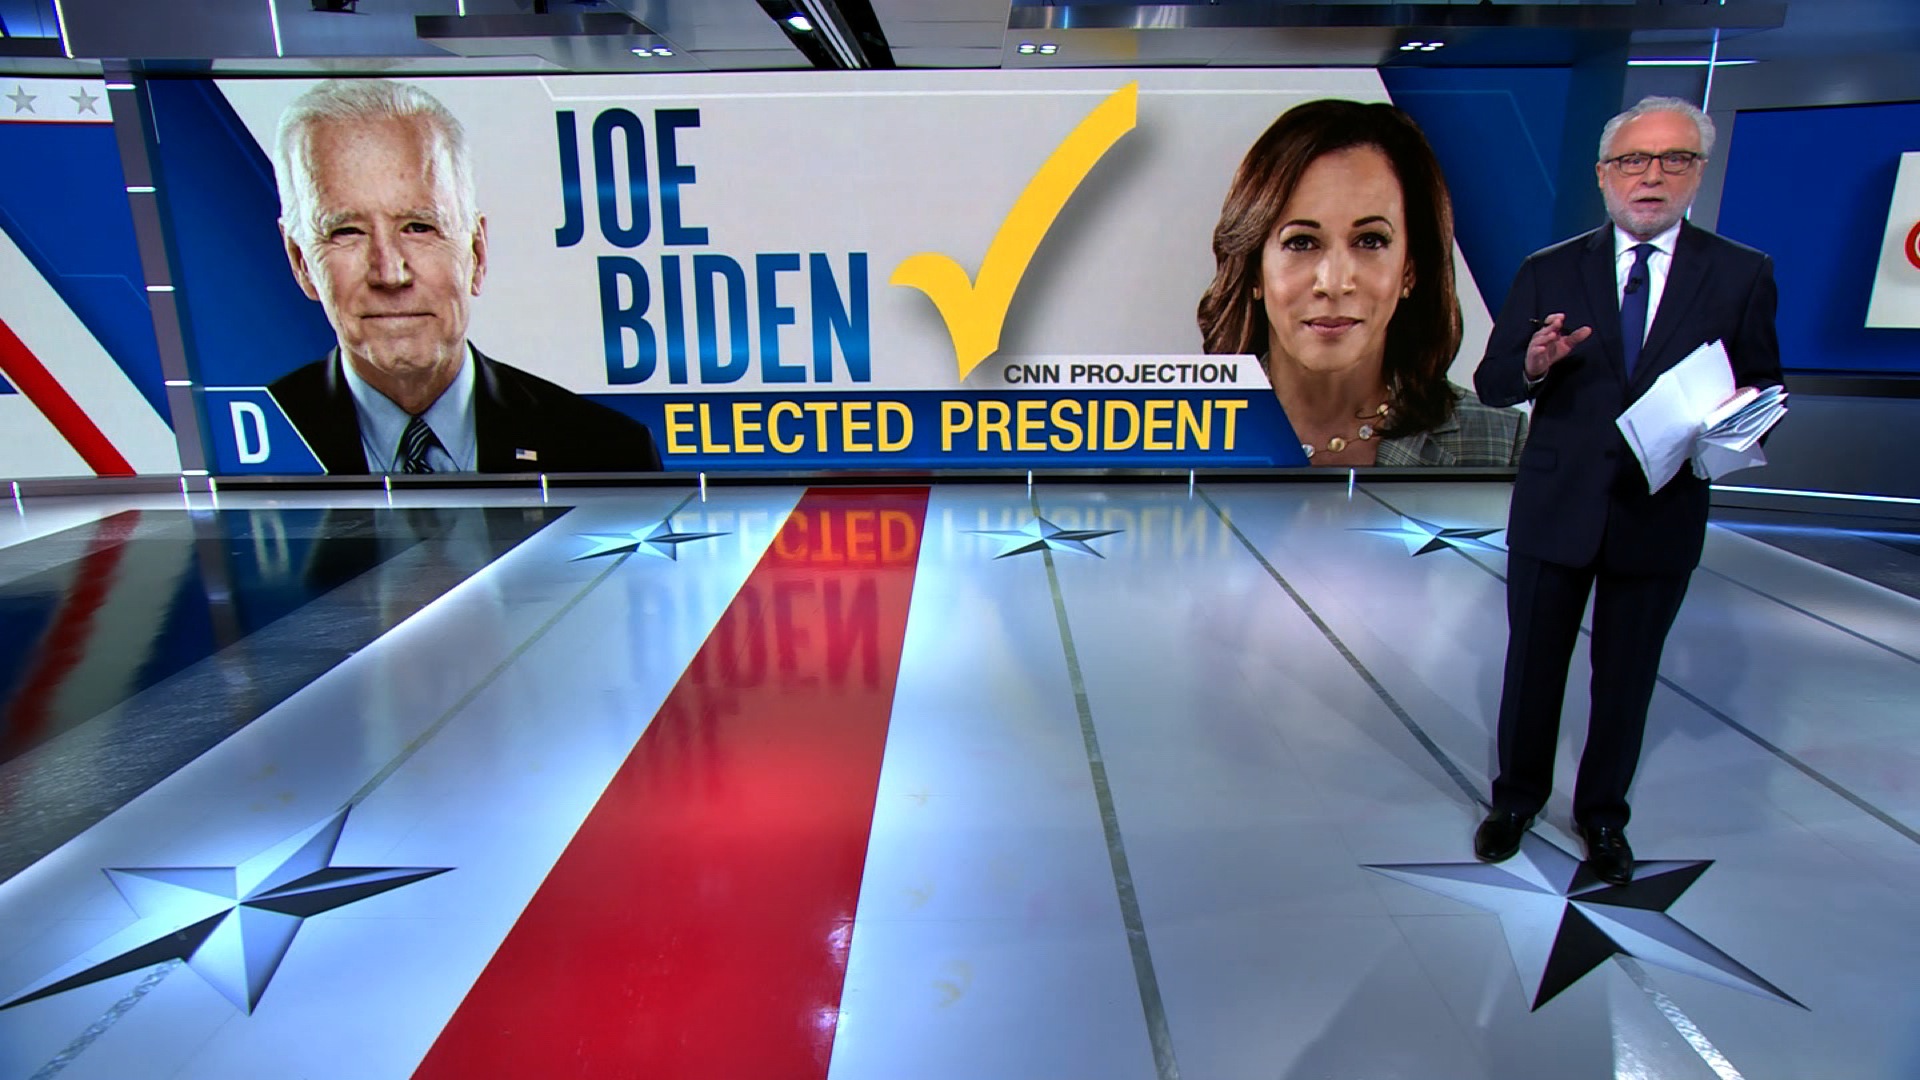 CNN calls Biden as president - enlarge